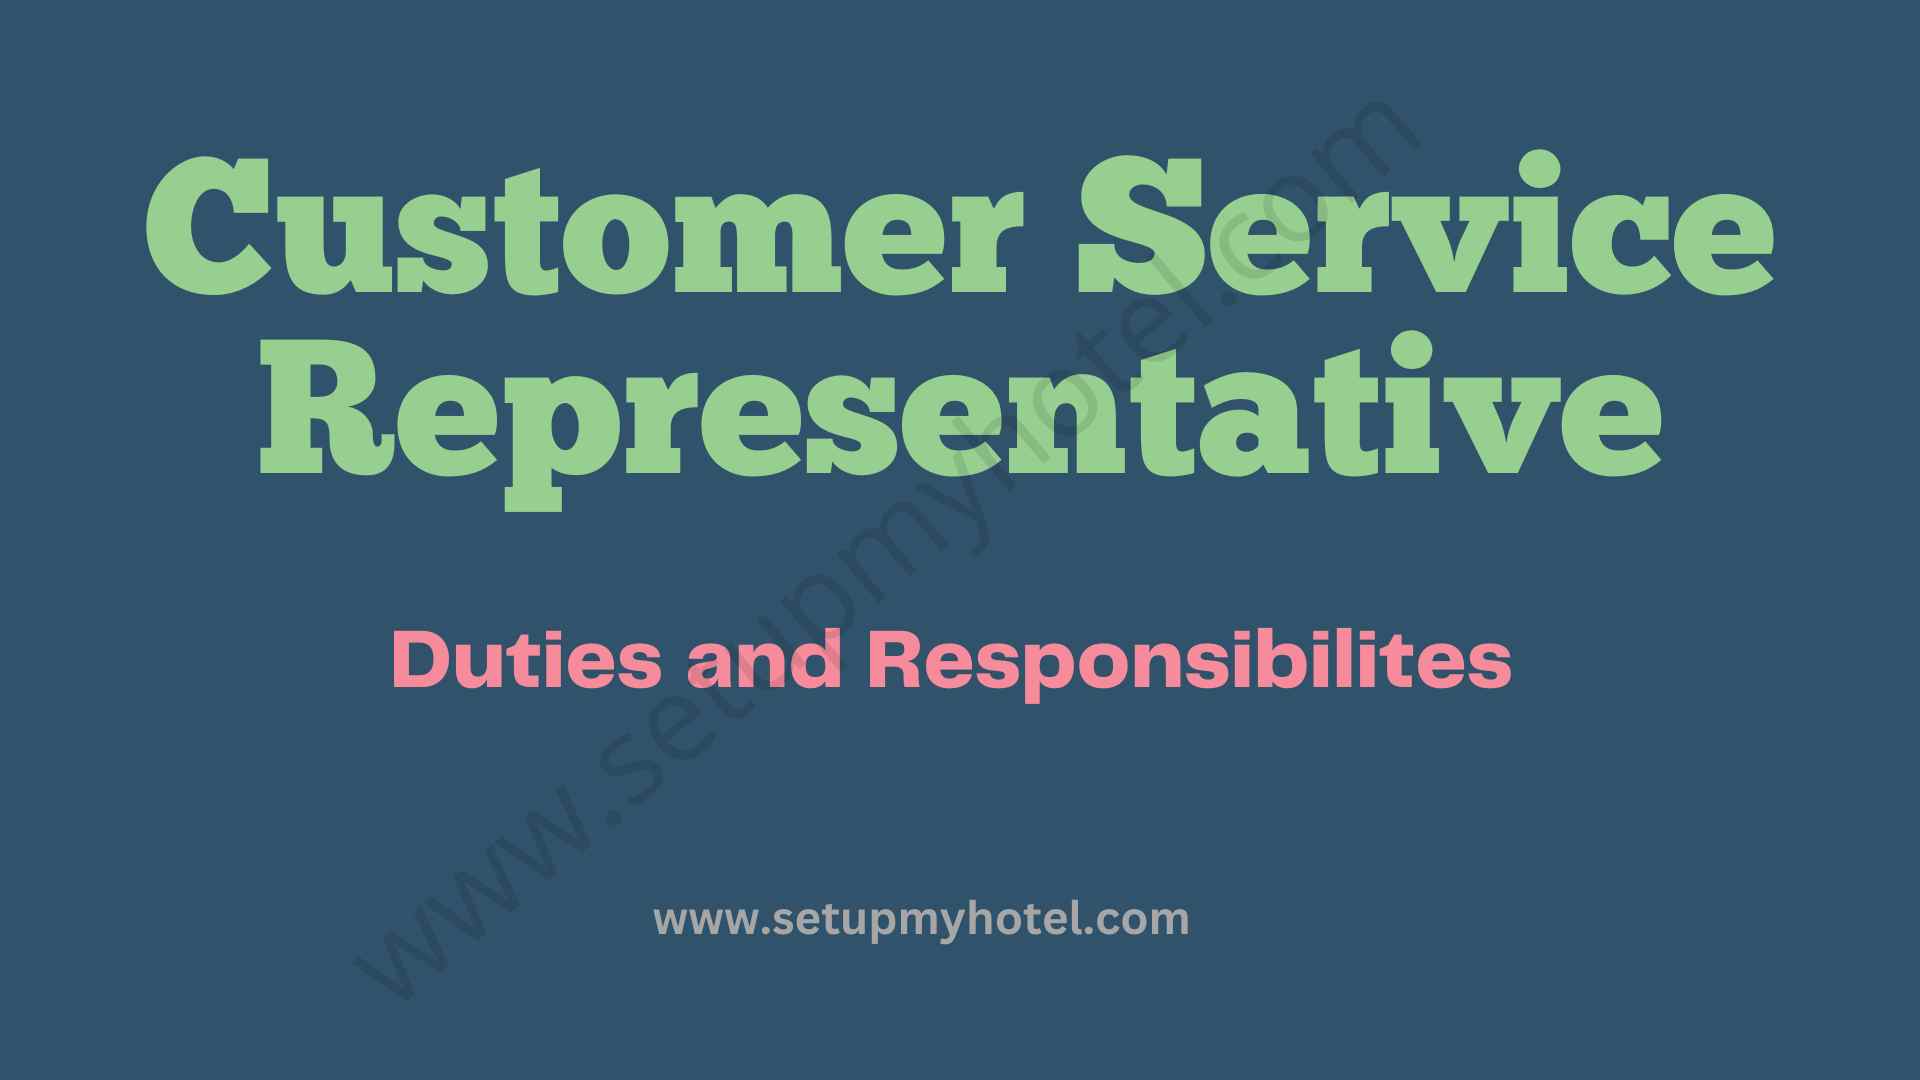 Job Description For Customer Service Representative